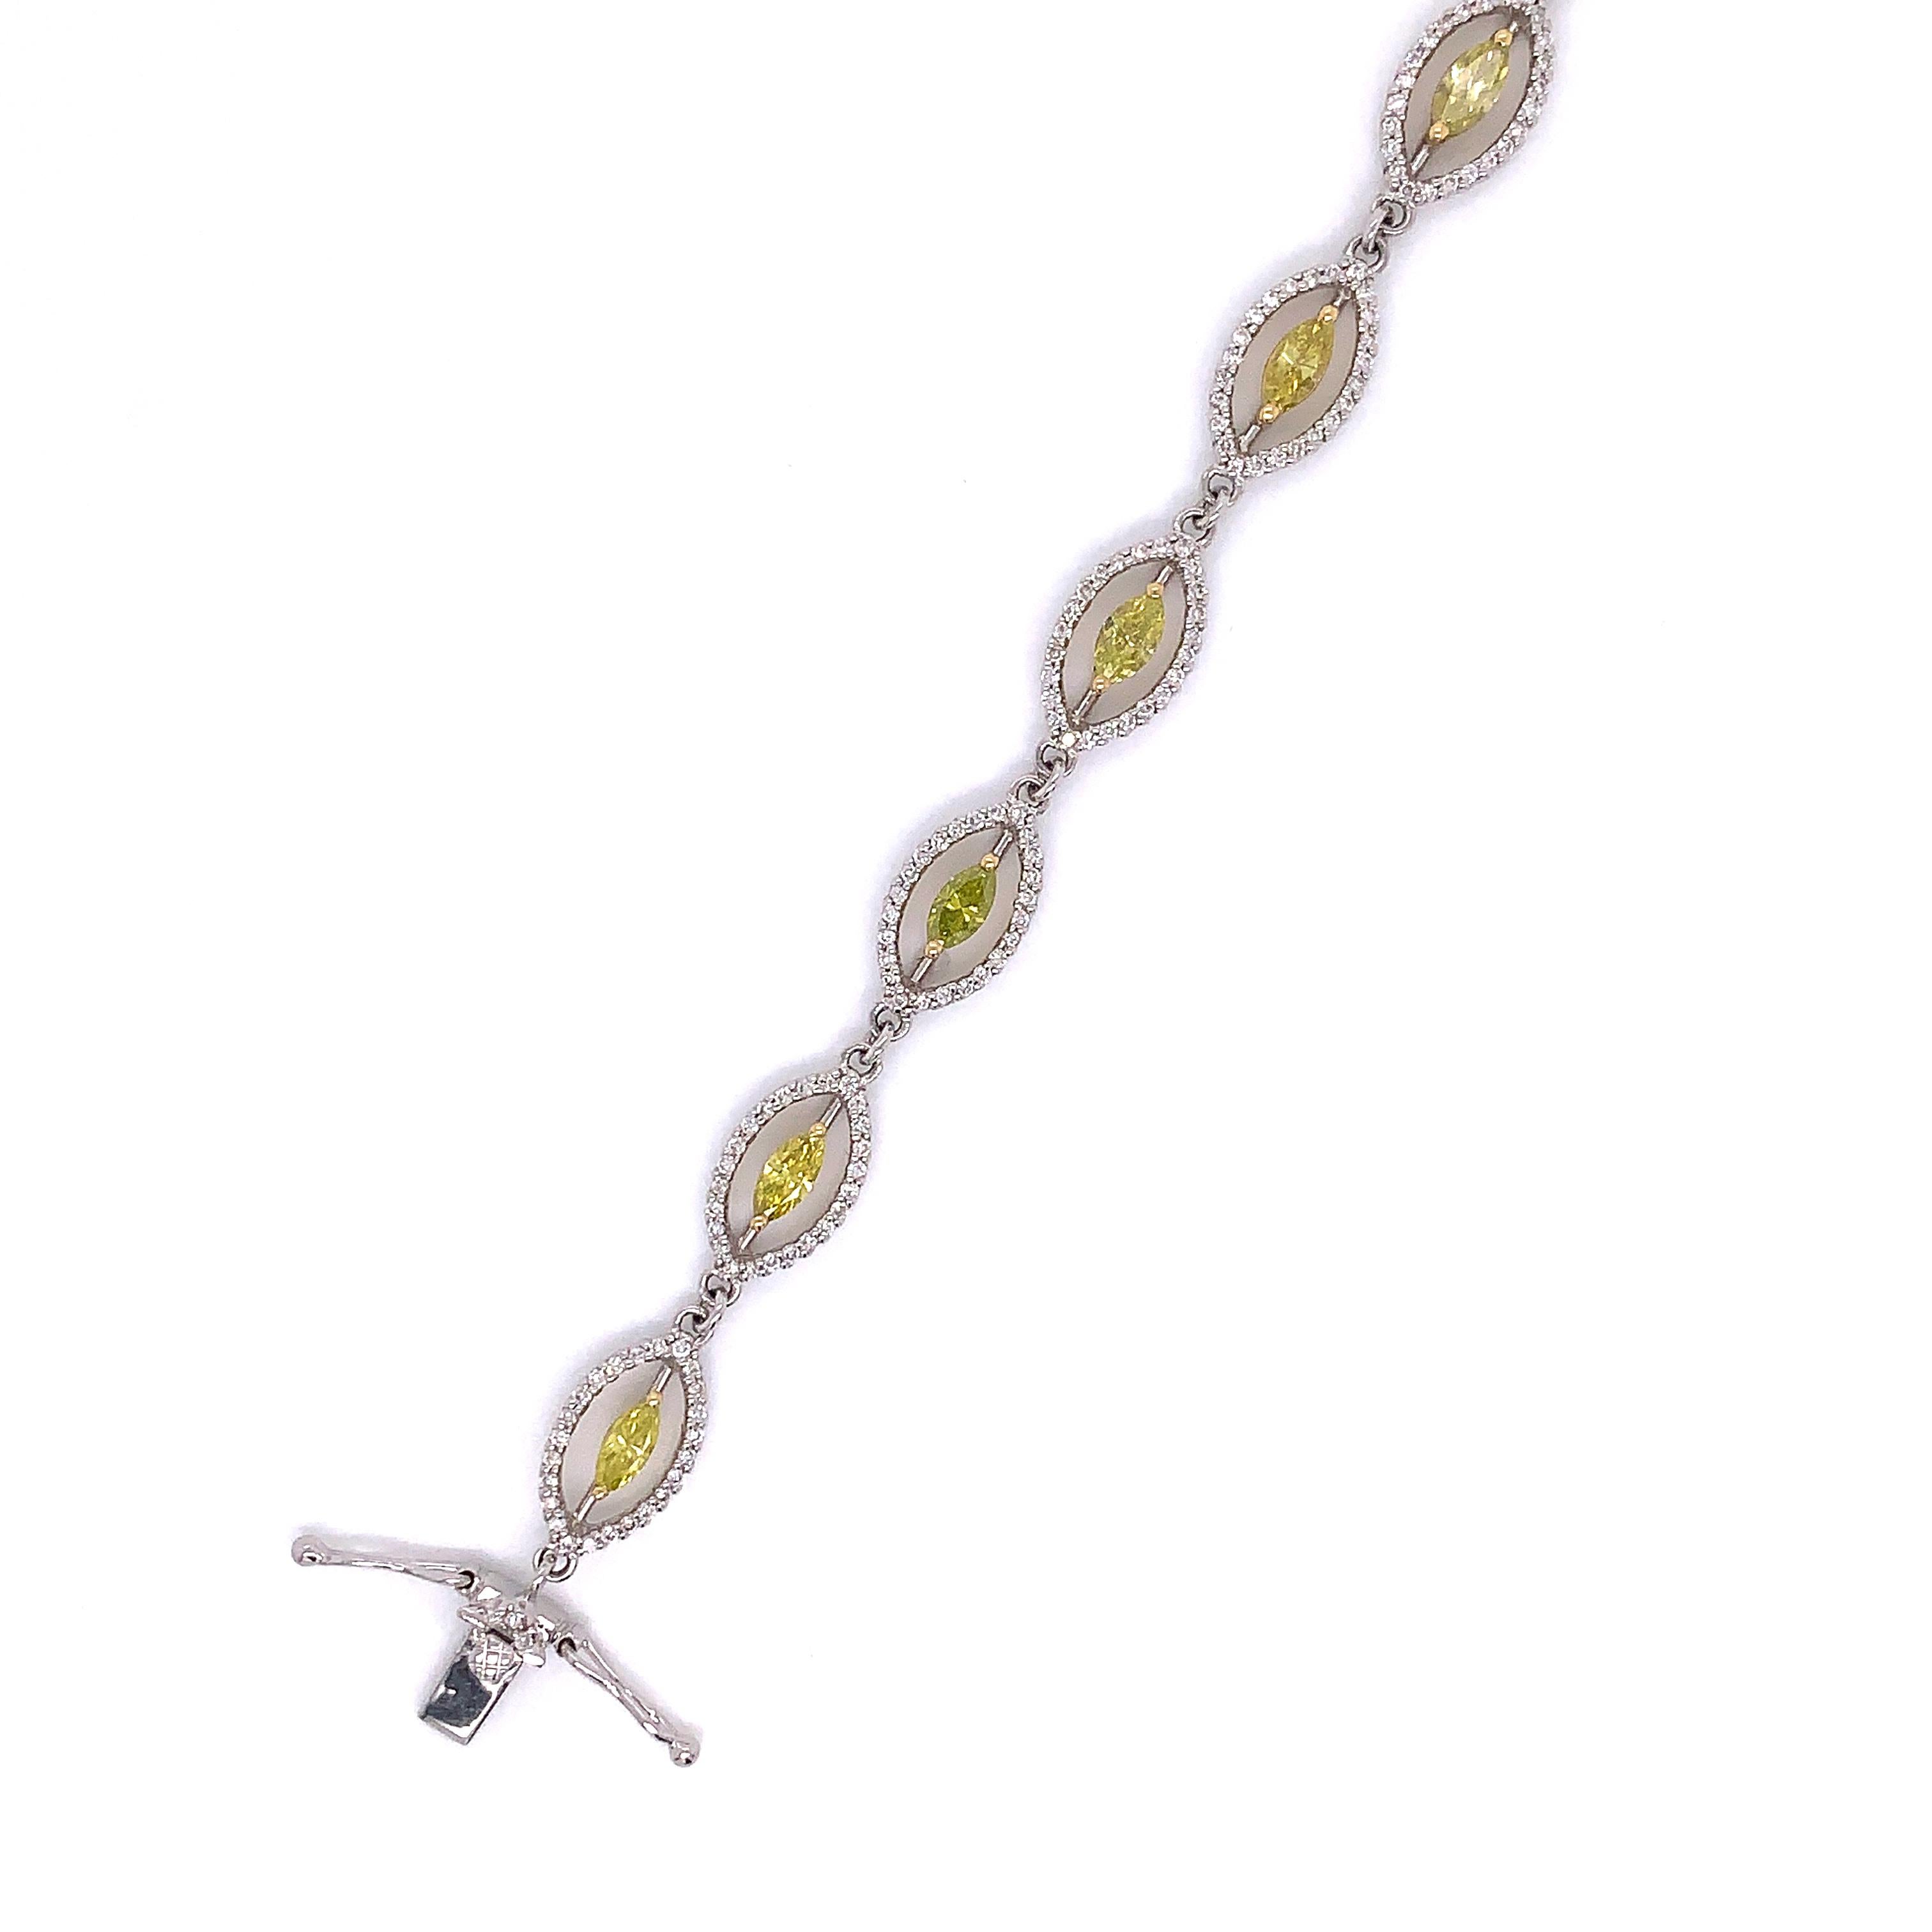 Contemporary 3.14 Carat Marquise Yellow Treated Diamond and White Diamond Bracelet